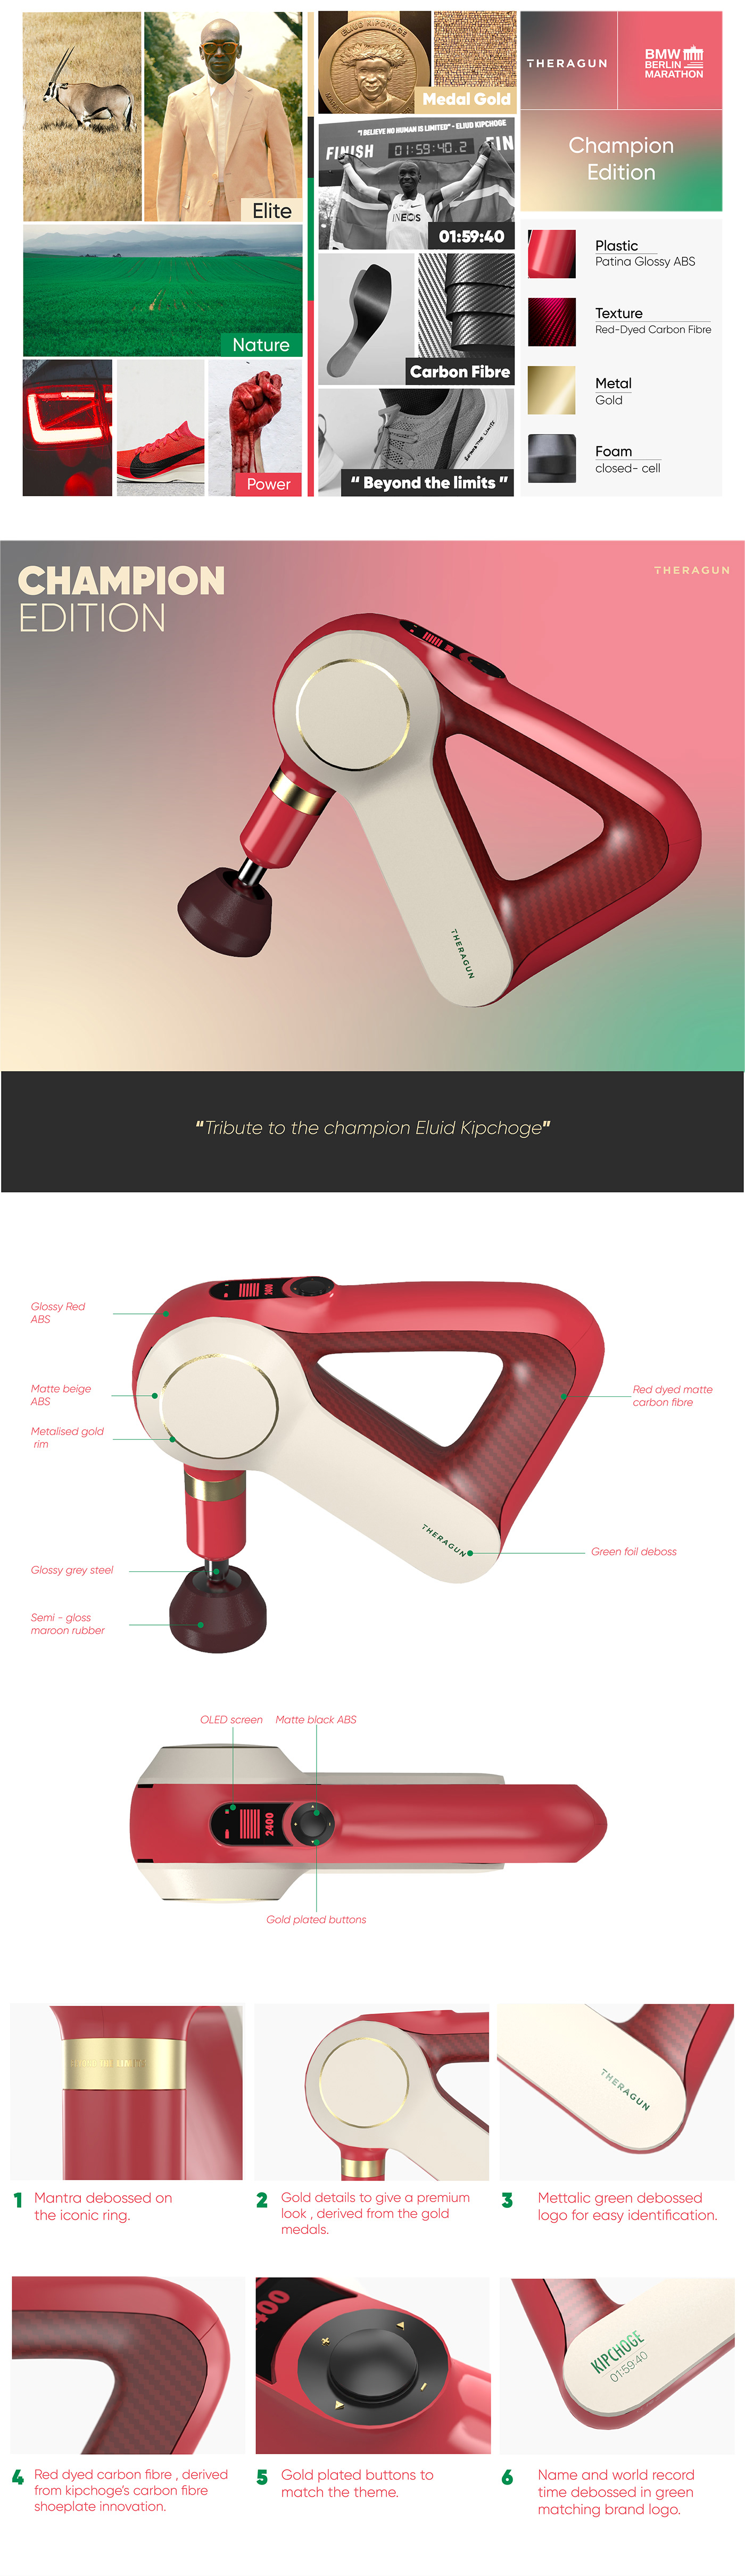 cmf CMFDesign design India keyshot mitid product design  PUNE rendering Theragun